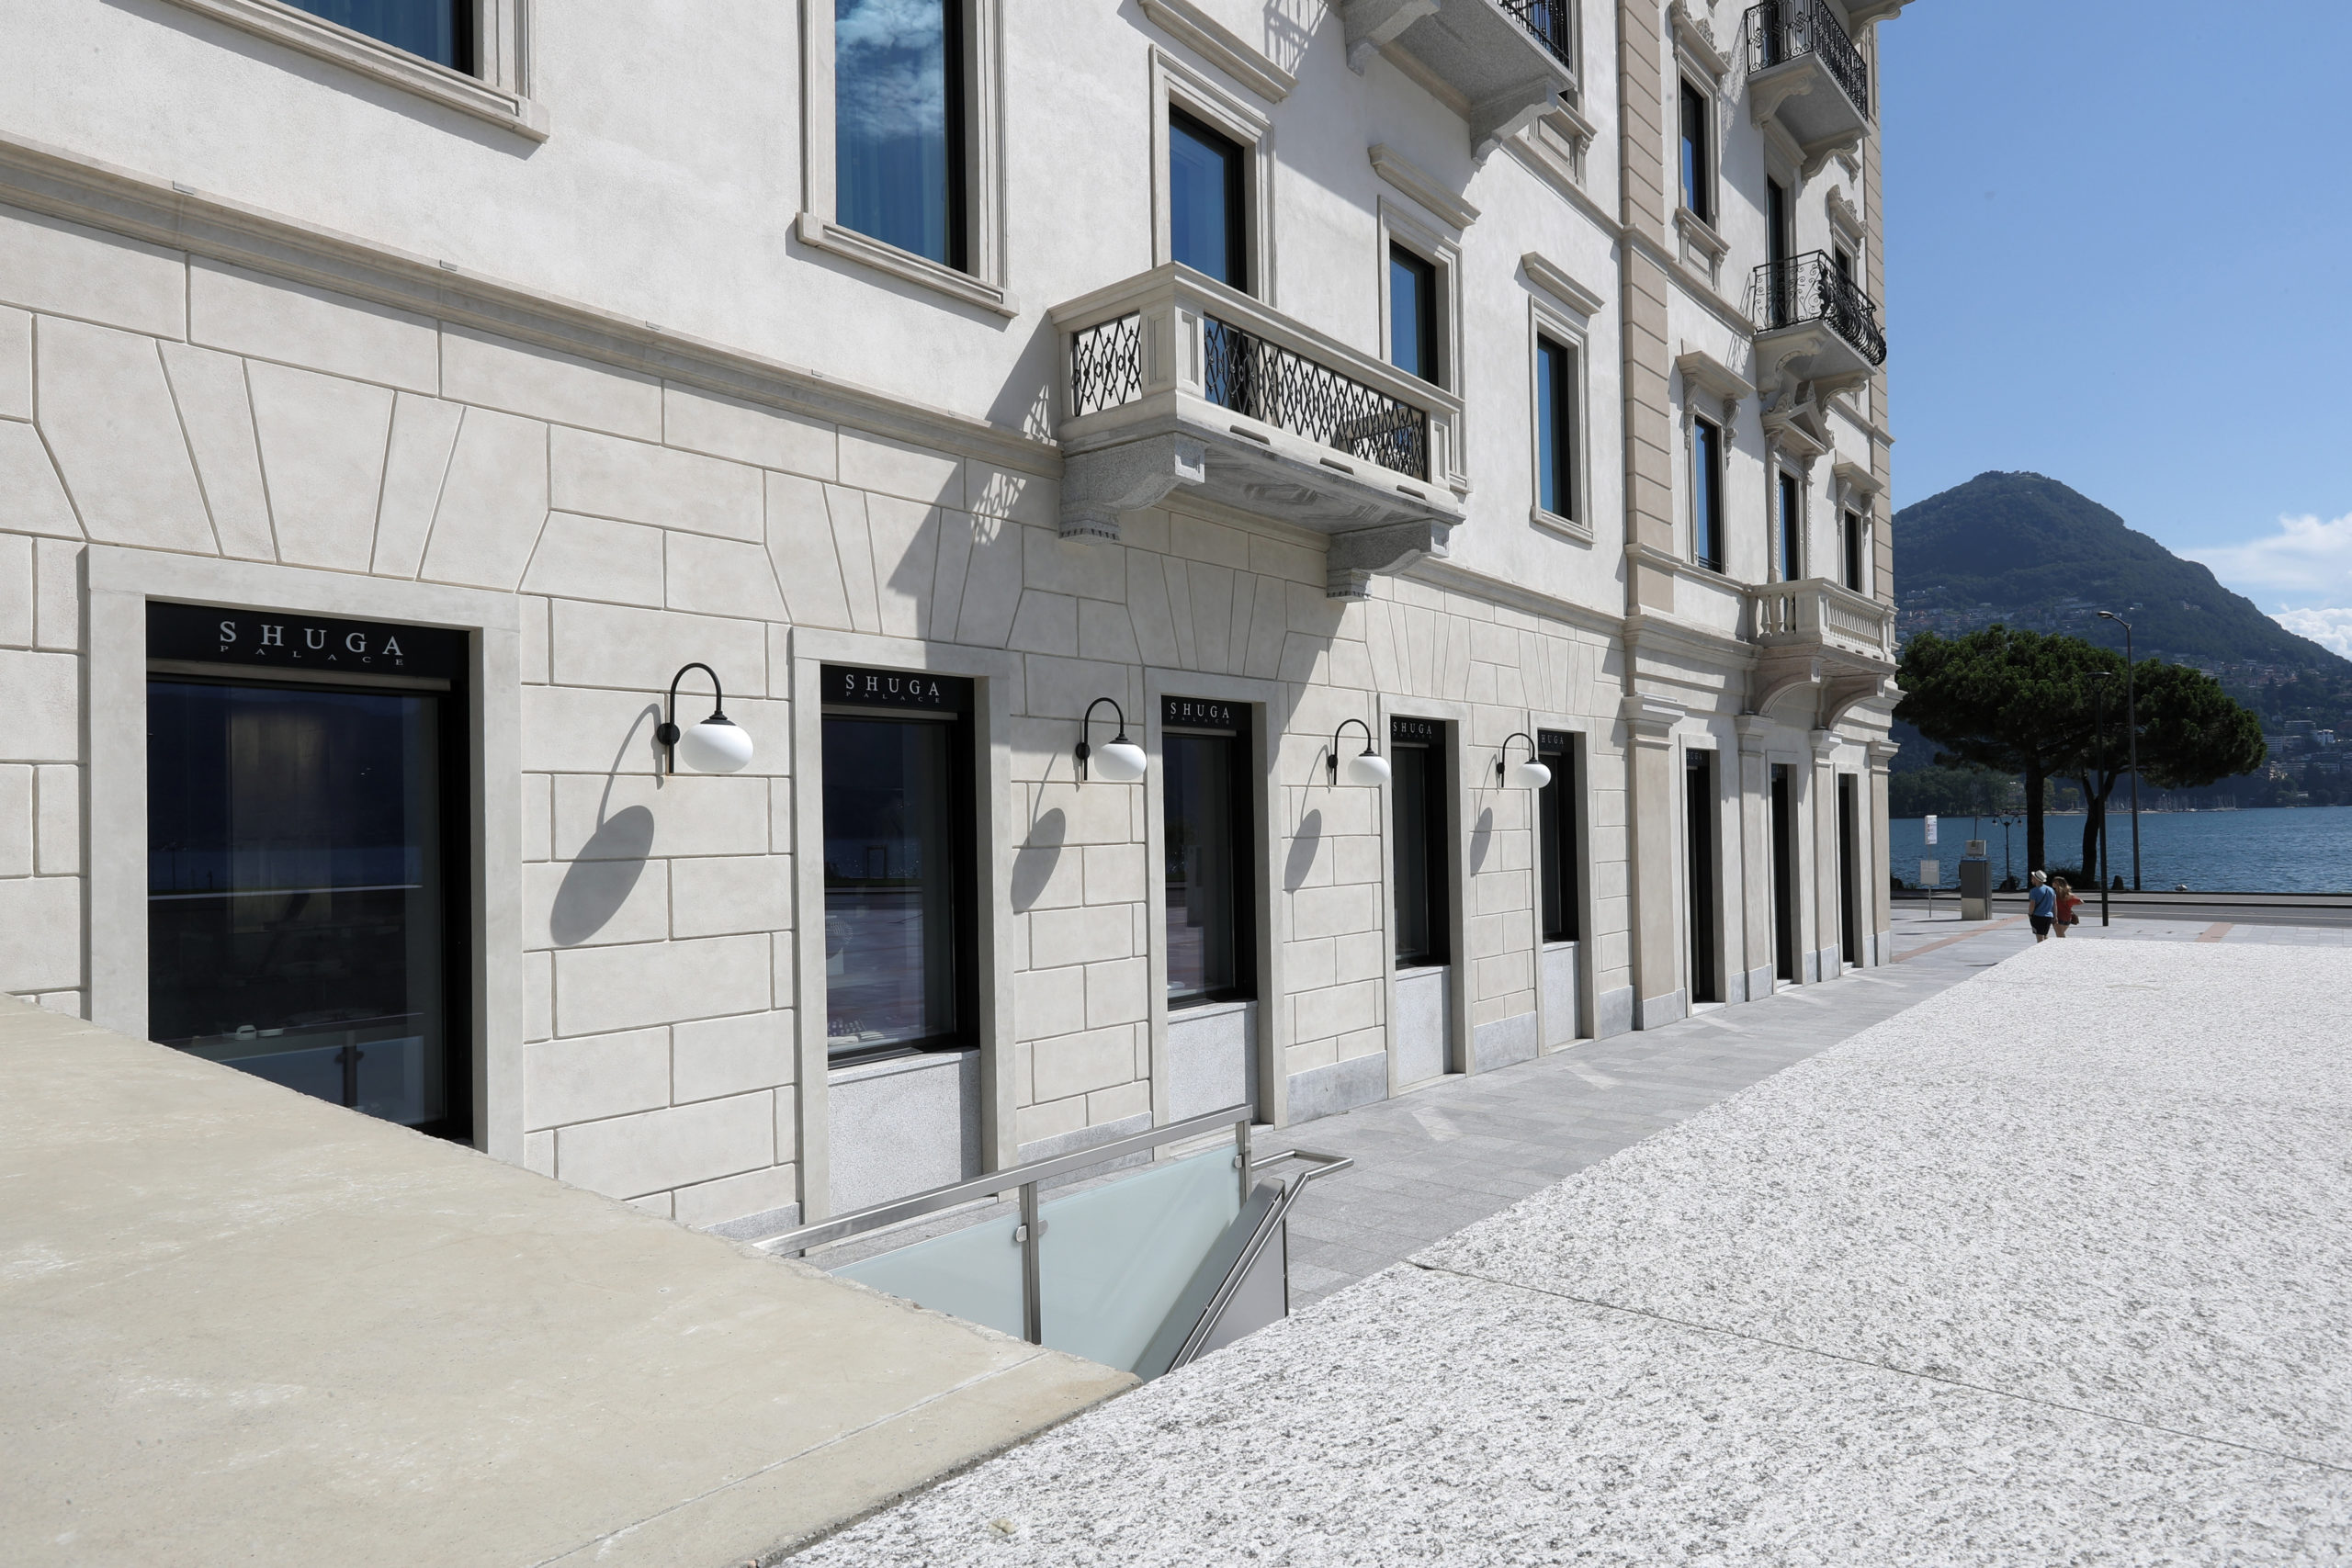 LUGANO, 26.07.2016 - Residenza Grand Palace, Piazza Bernardino Luini, 6900 Lugano.

copyright by immobiliare mantegazza sa / photo by remy steinegger - www.steineggerpix.com